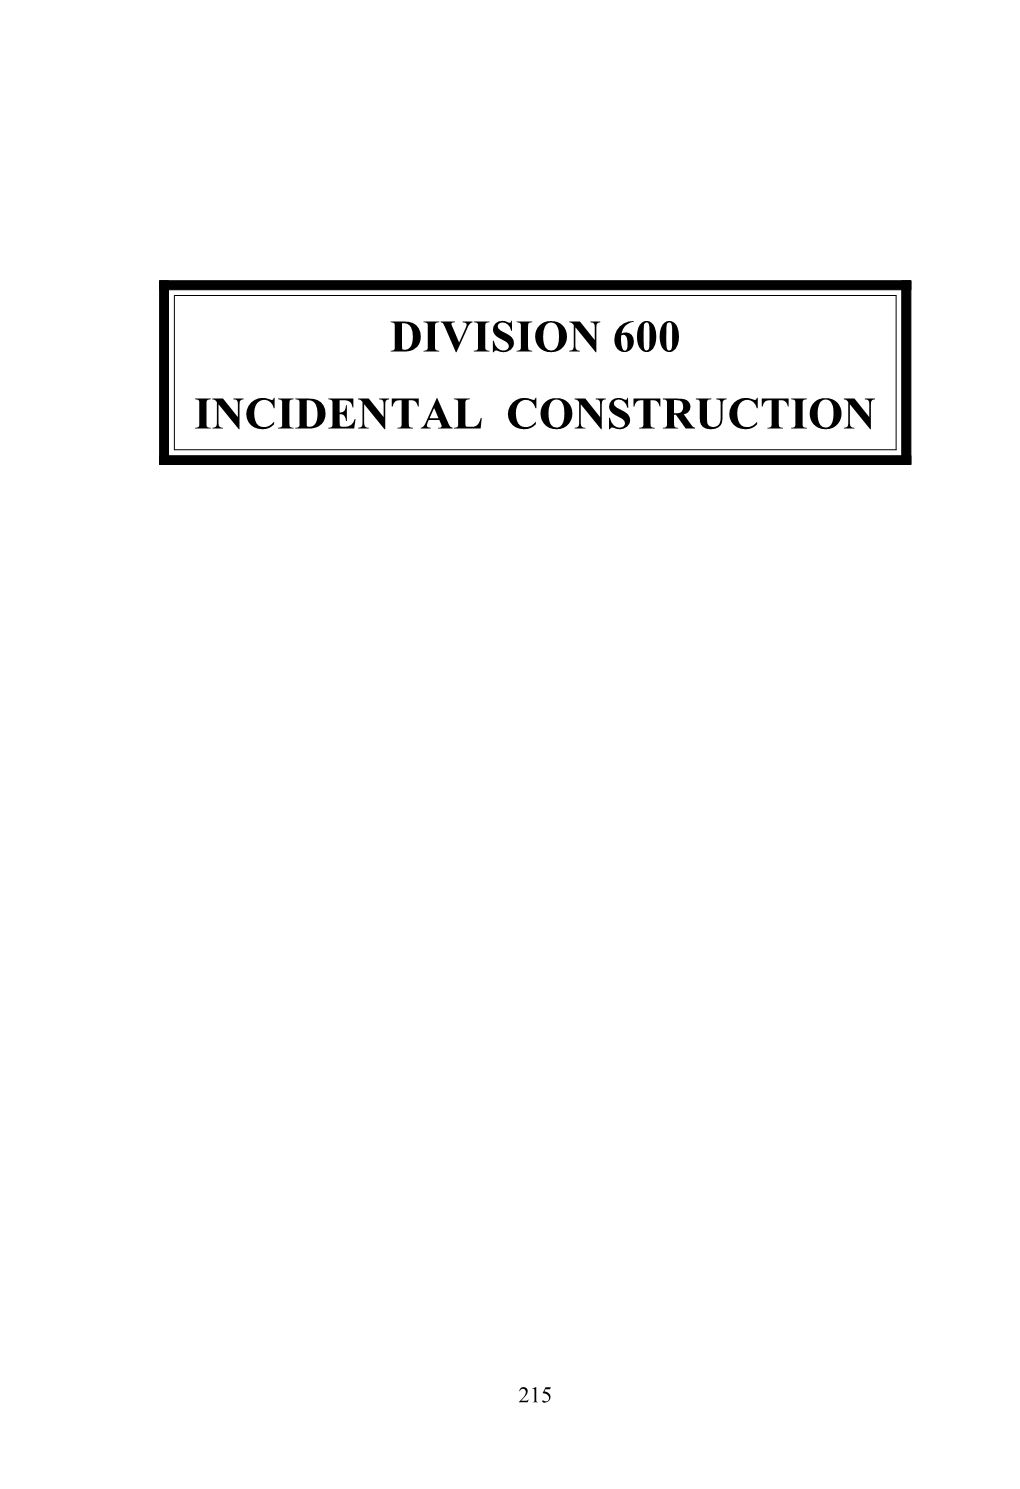 Section 601. MINOR CONCRETE STRUCTURES